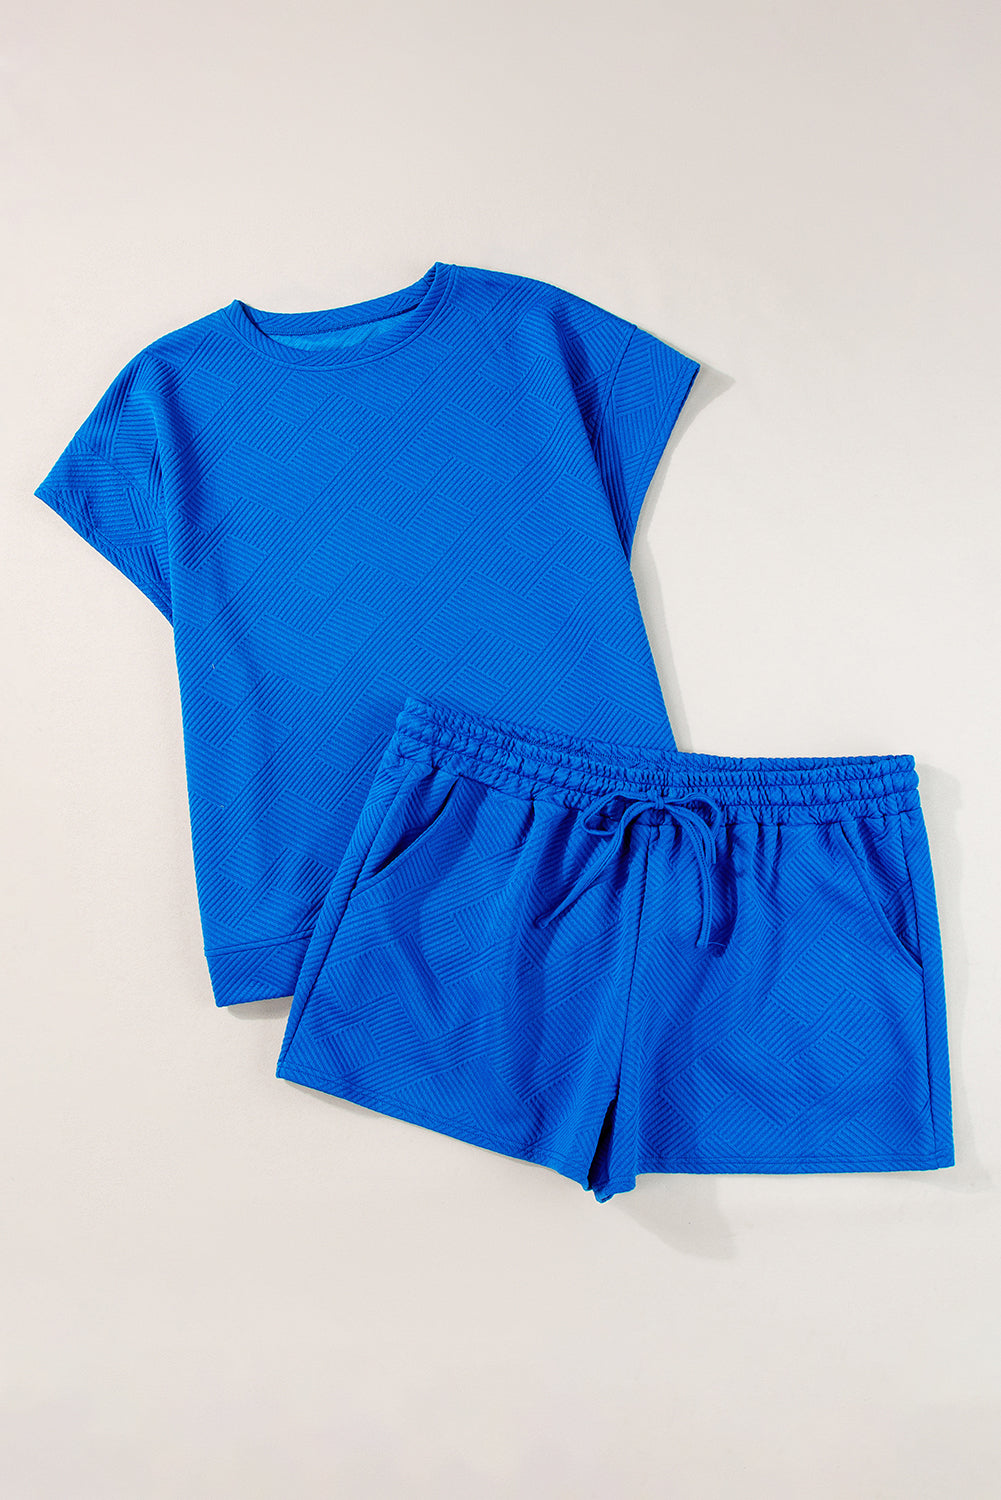 Dark Blue Plus Size Fashion Textured Short 2pcs Outfit